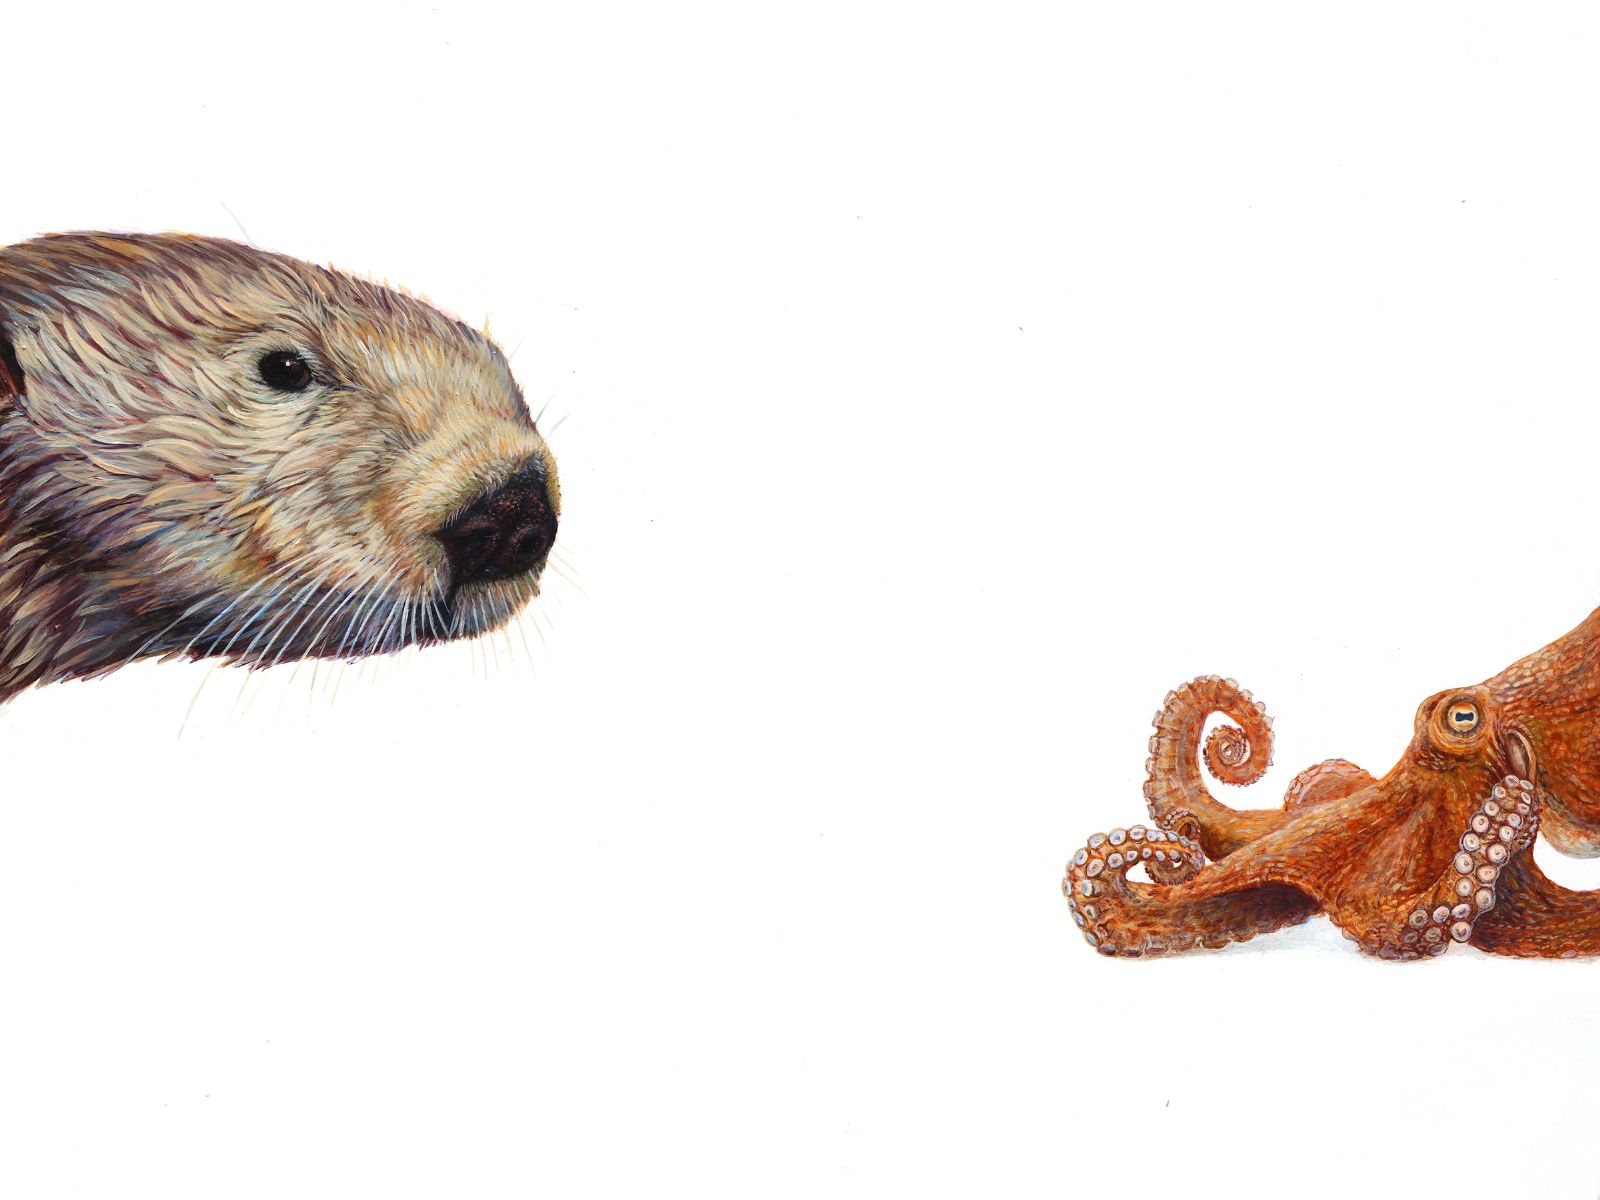 Top Predator: Otter & Octopus by Hazel Mountford